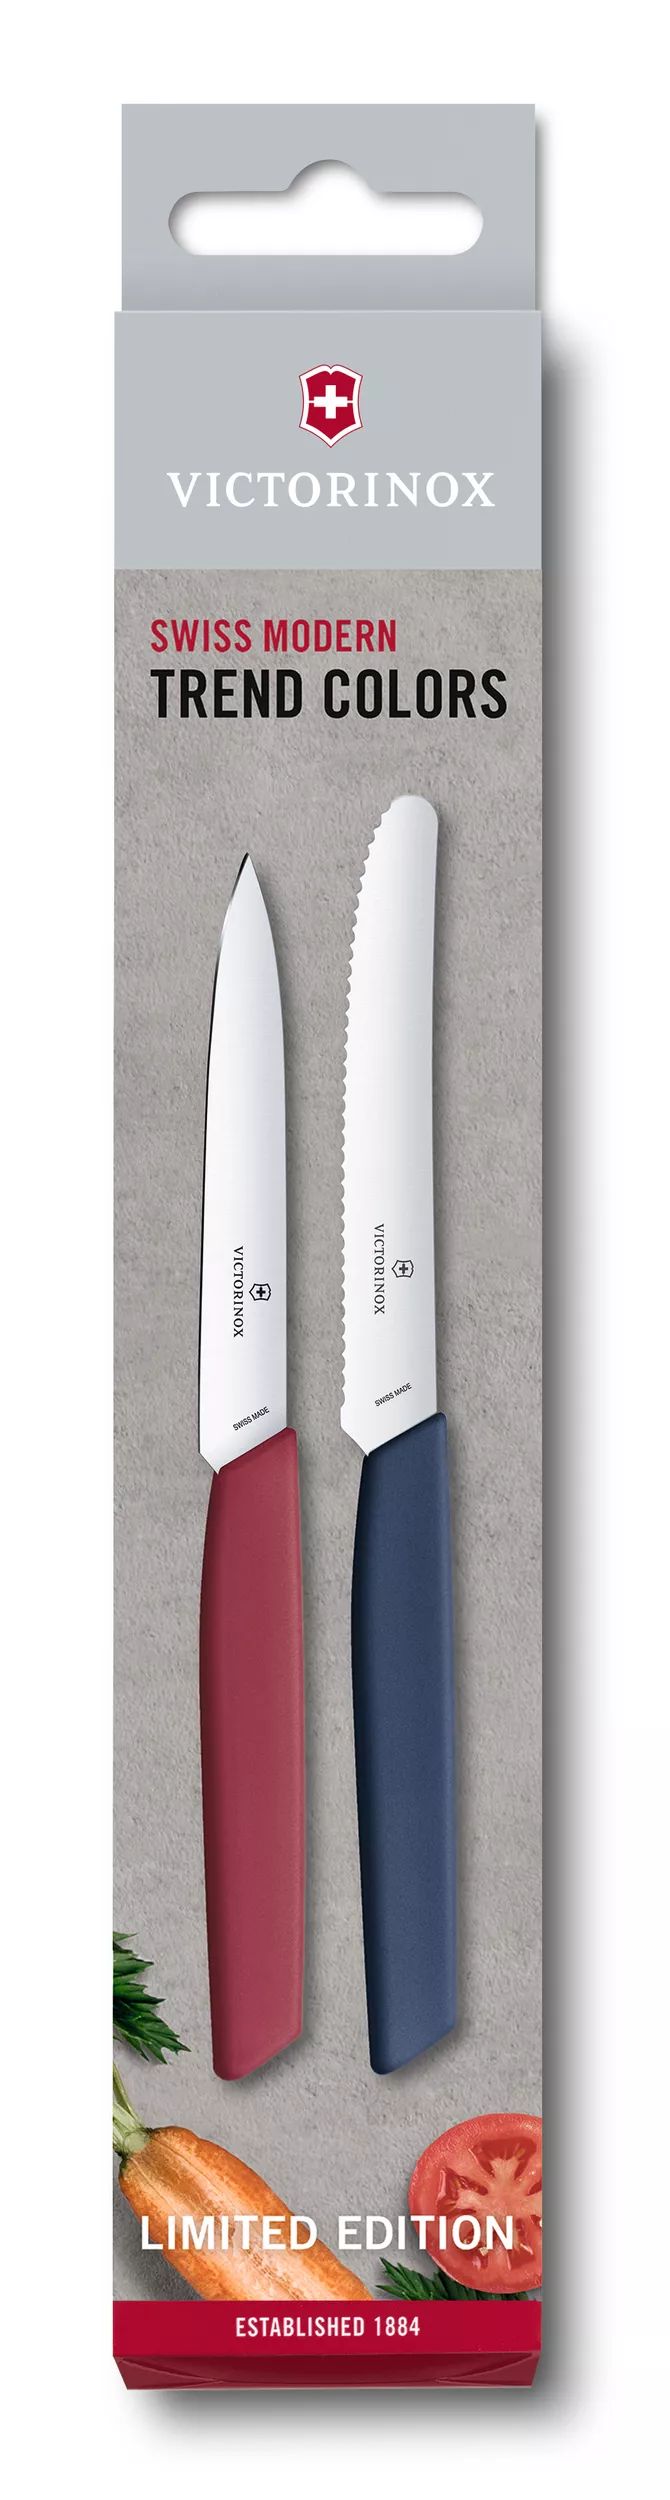 Set de cuchillos para verdura Swiss Modern, 2 piezas-6.9096.2L1